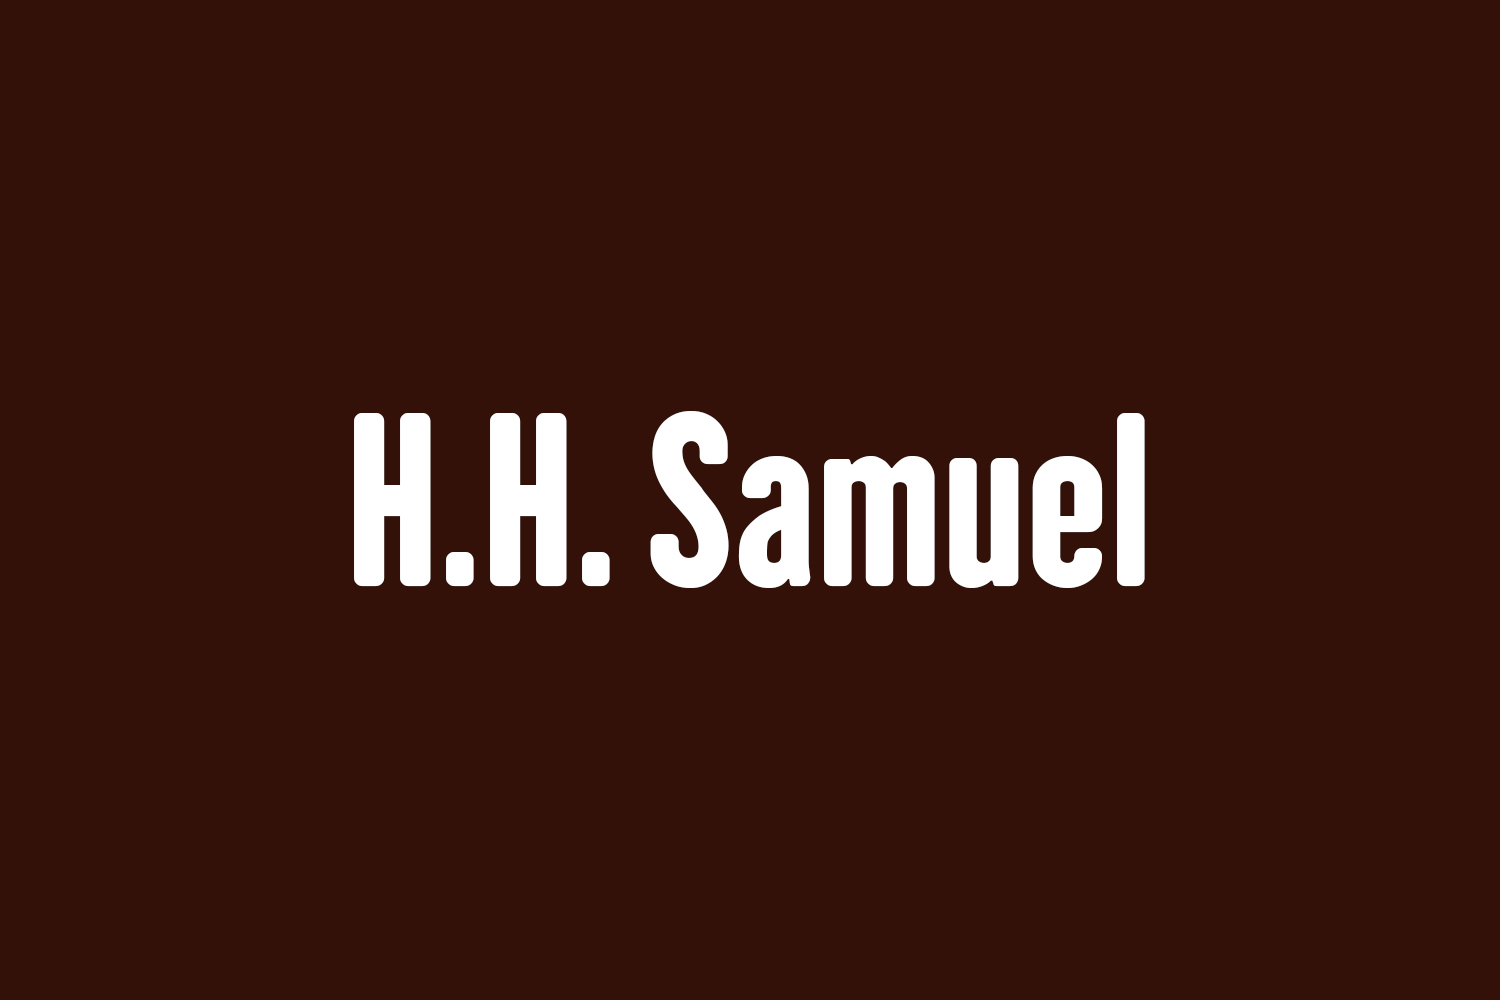 H.H. Samuel Free Font